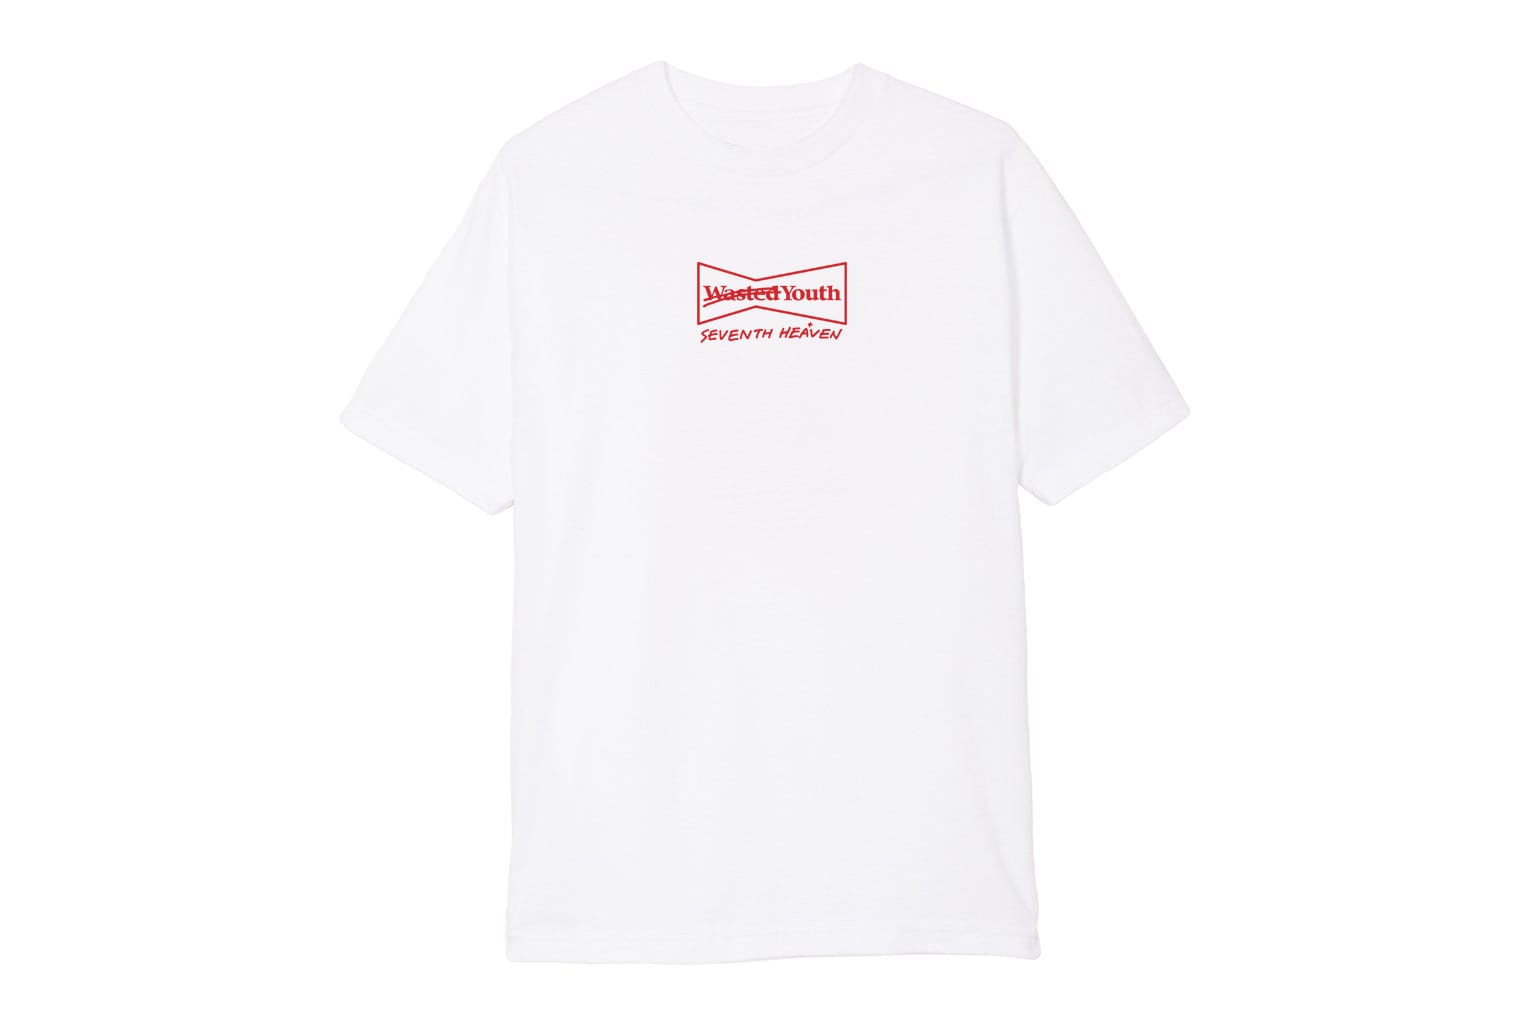 Wasted youth ✖︎ Seventh heaven サイズ L 新品 Tシャツ/カットソー(半袖/袖なし) 大幅割引セール